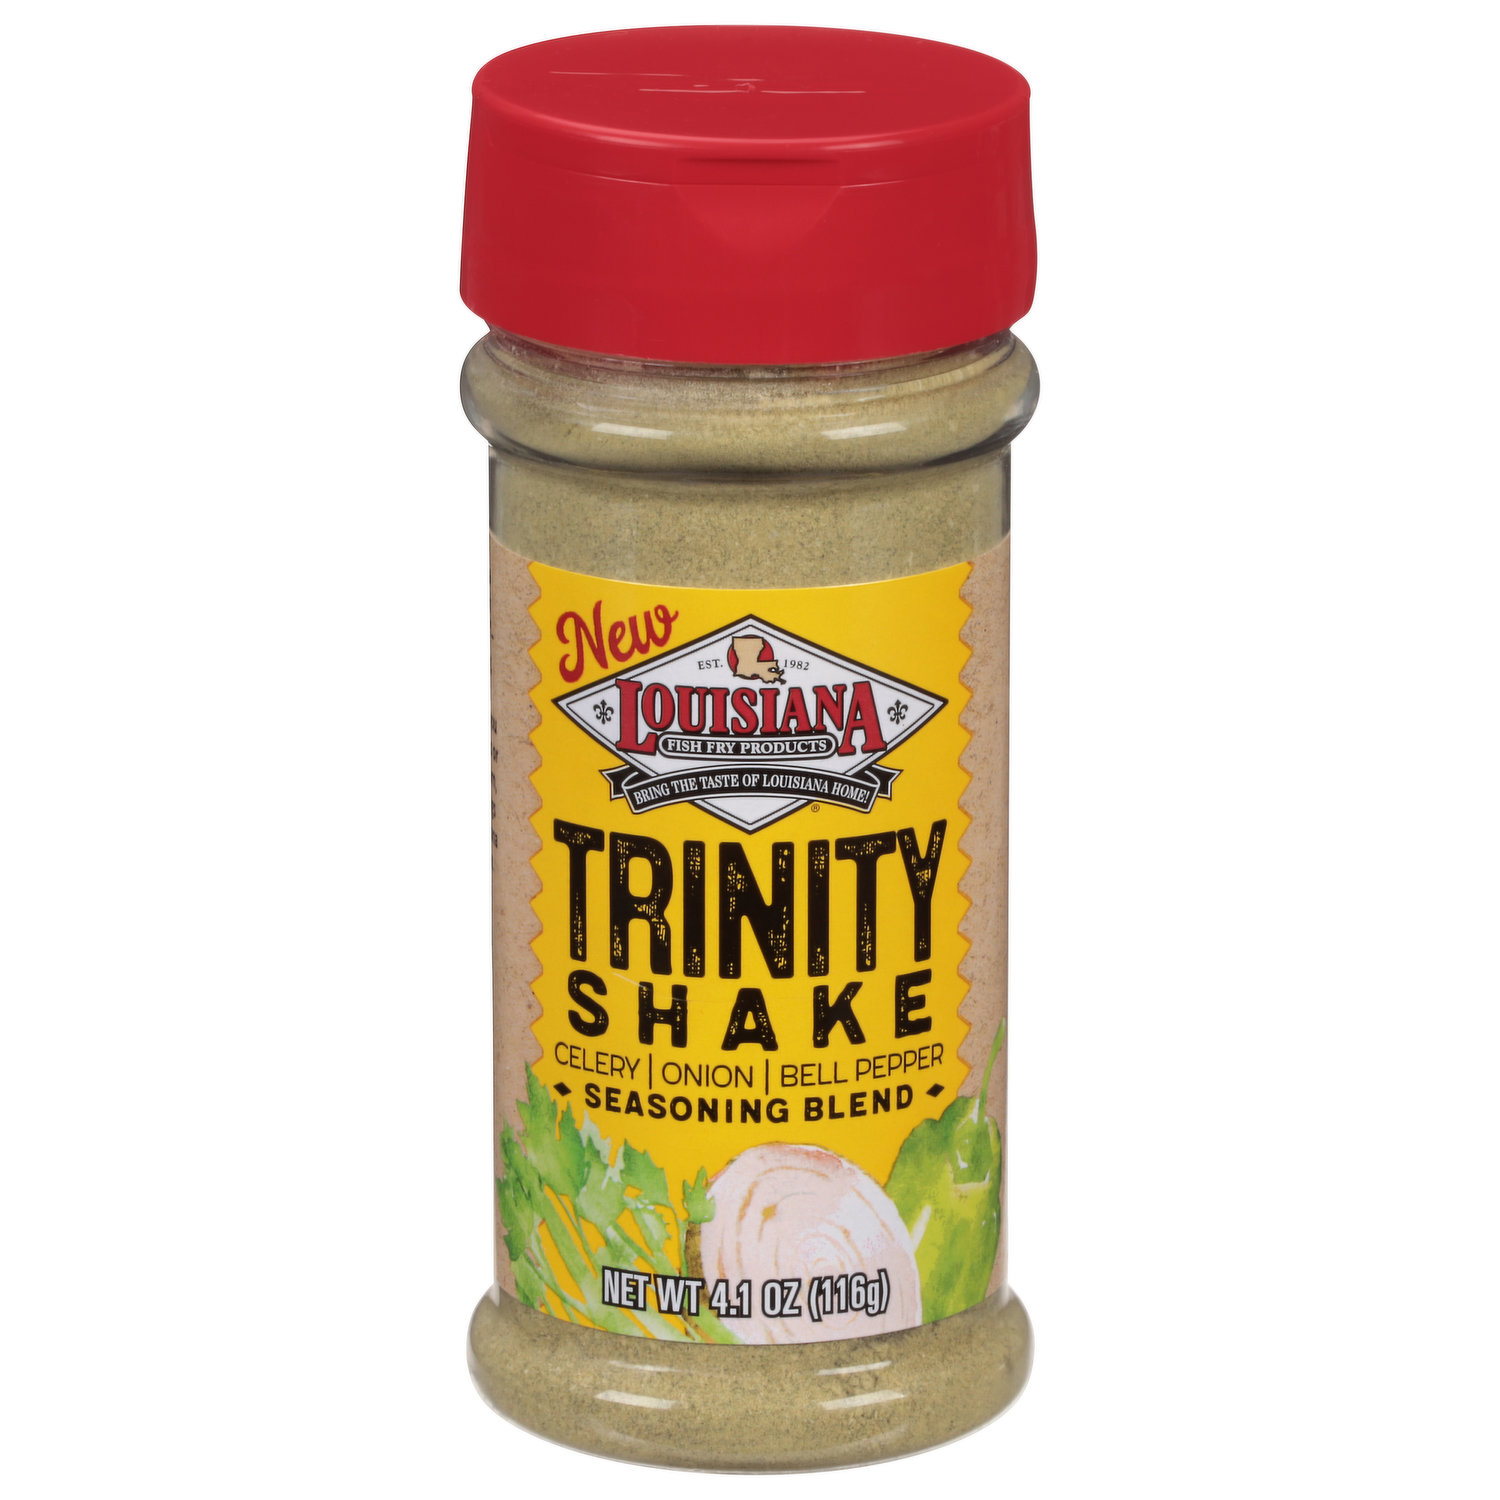 The Trinity - Red Stick Spice Company